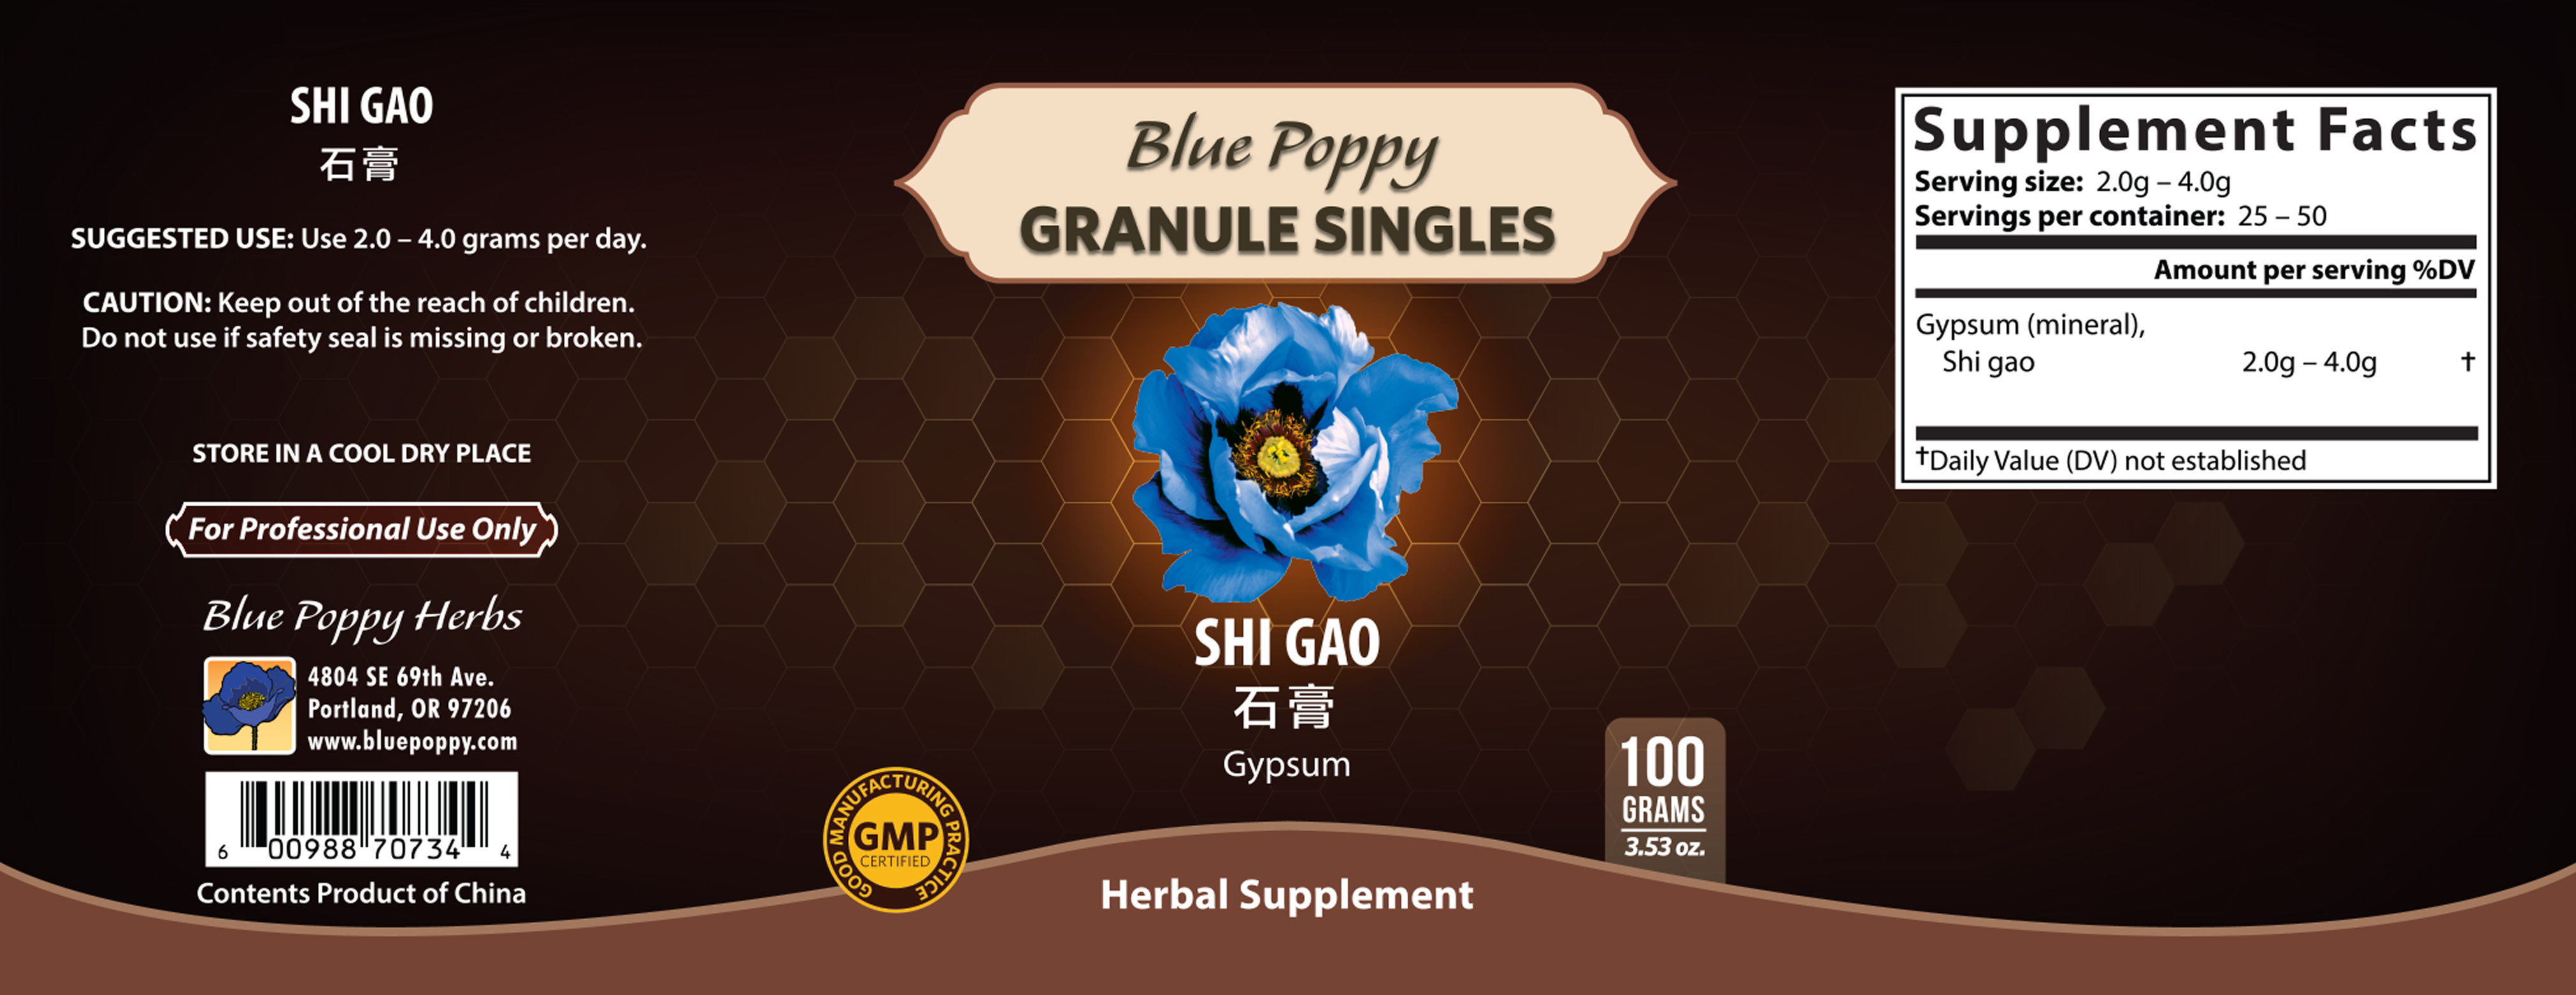 Shi Gao Granules